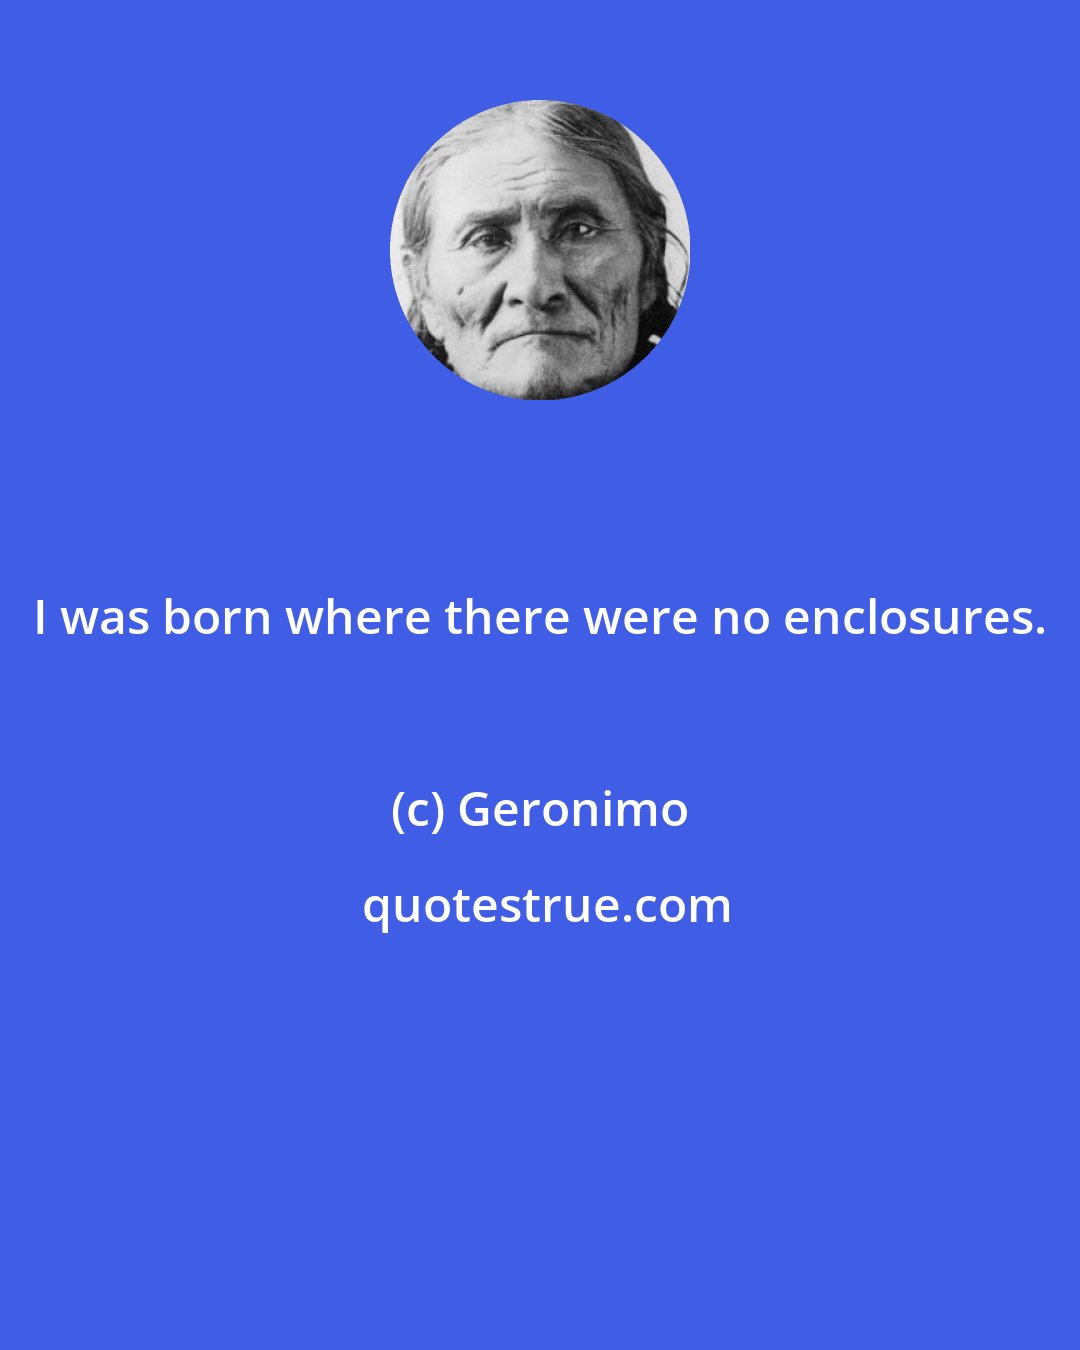 Geronimo: I was born where there were no enclosures.